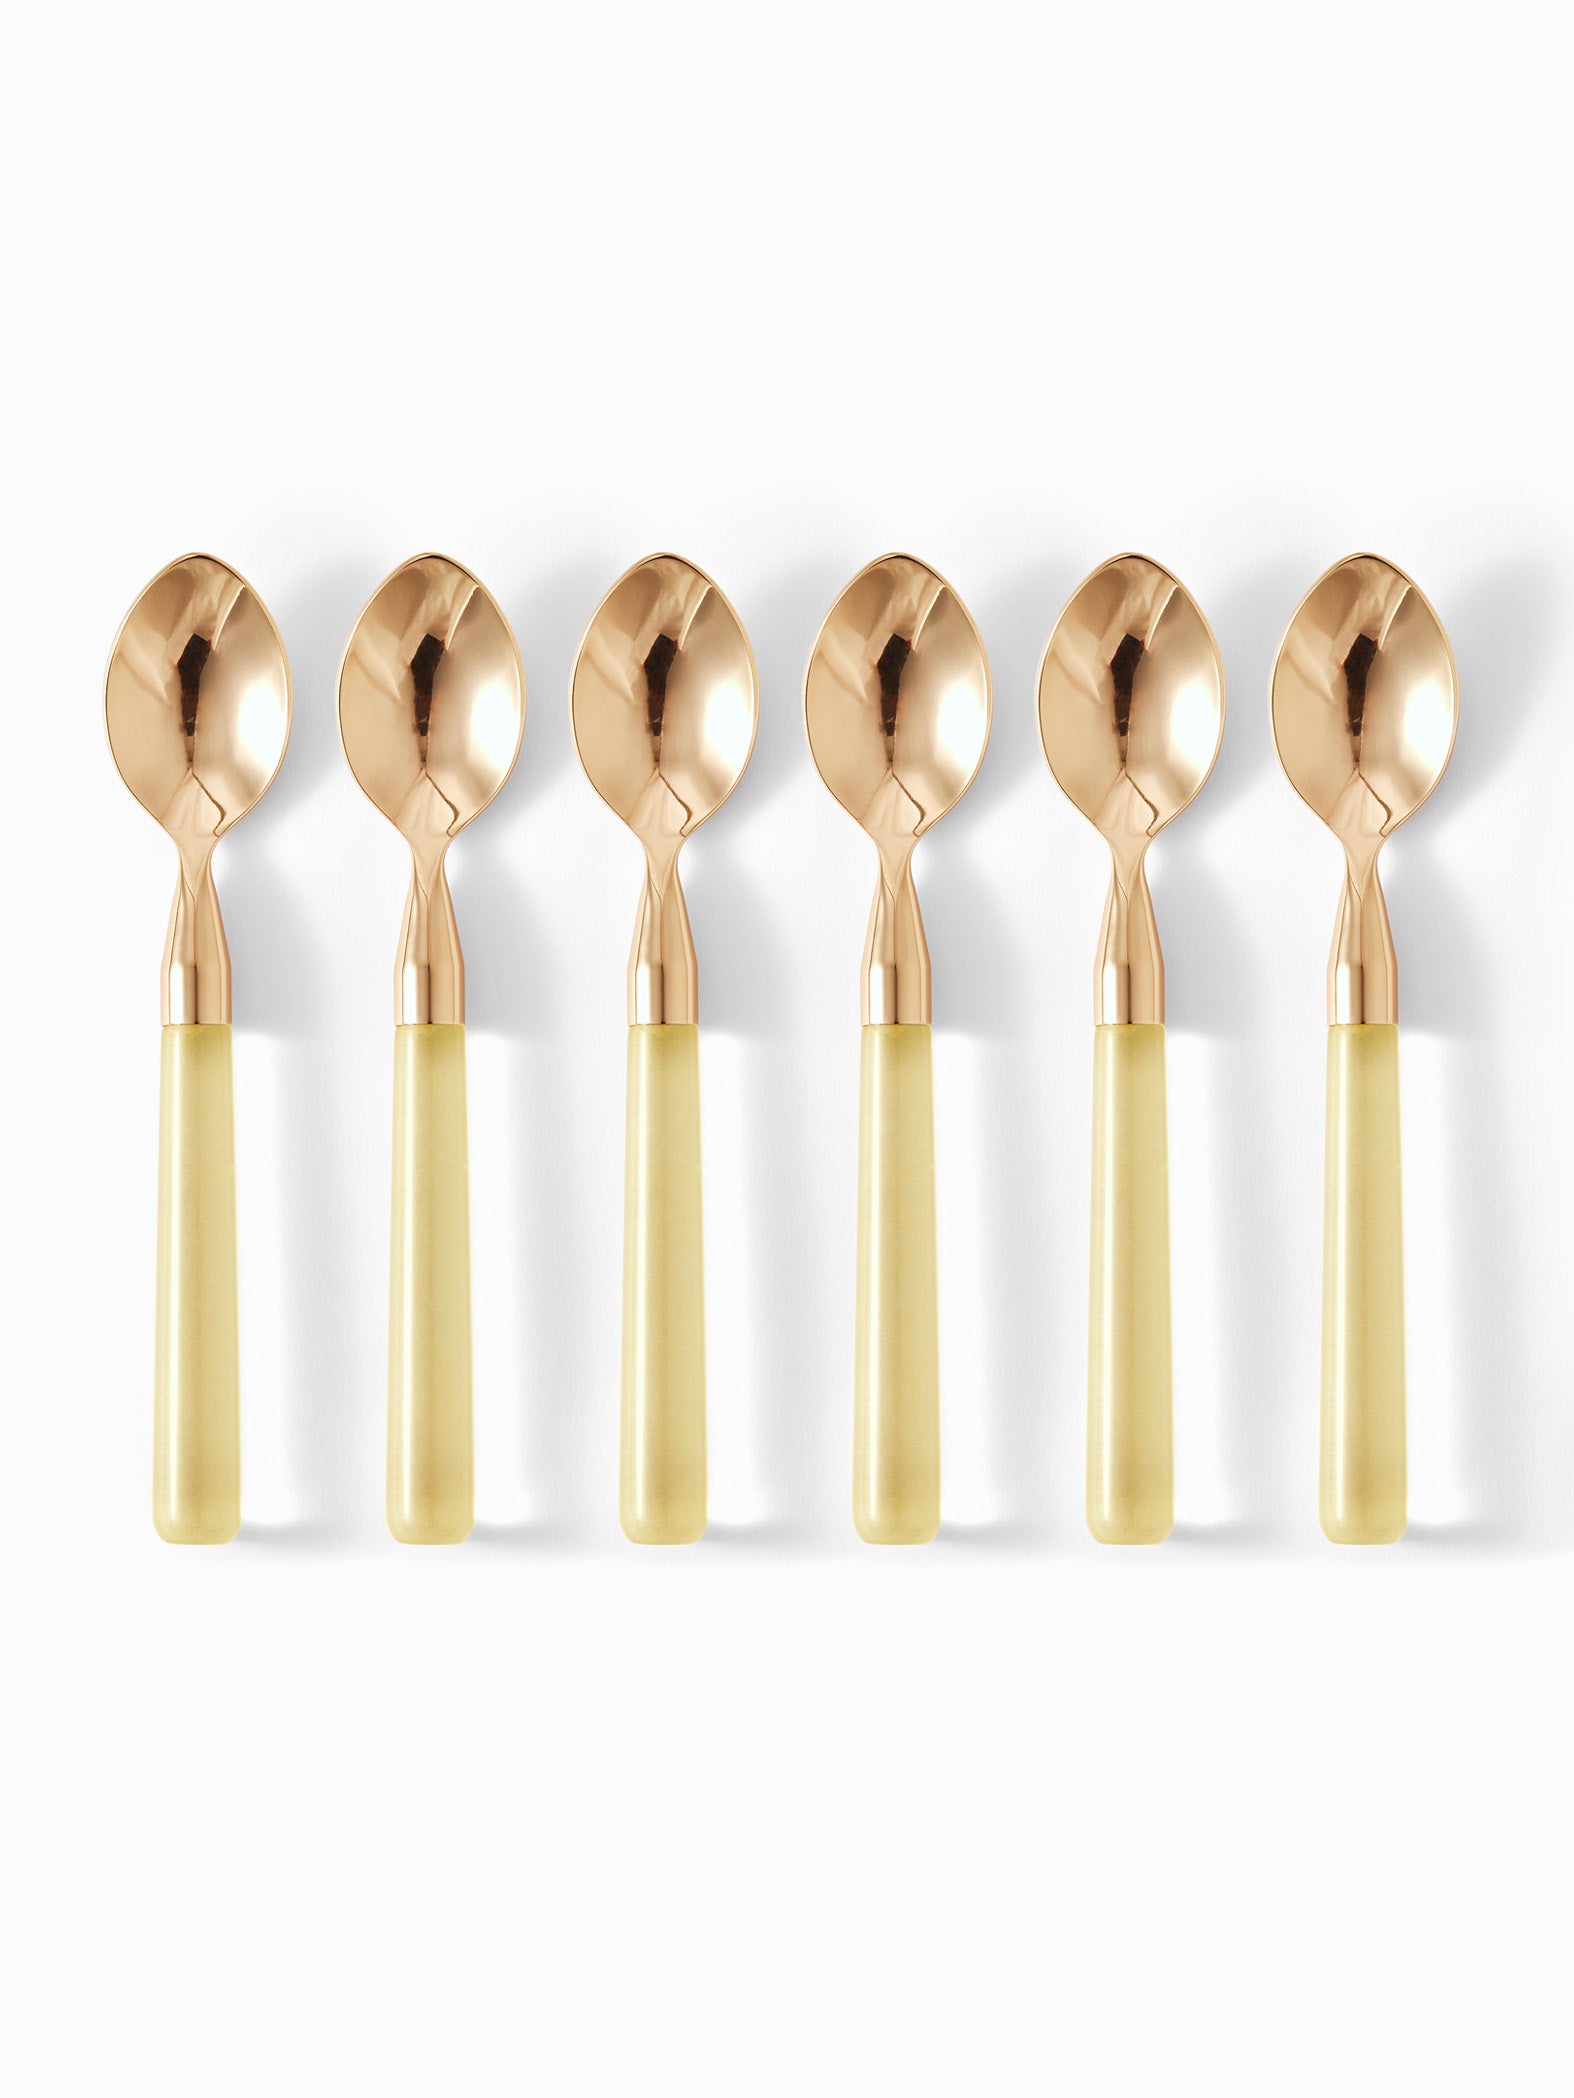 Gold & Acrylic Dinner Spoons